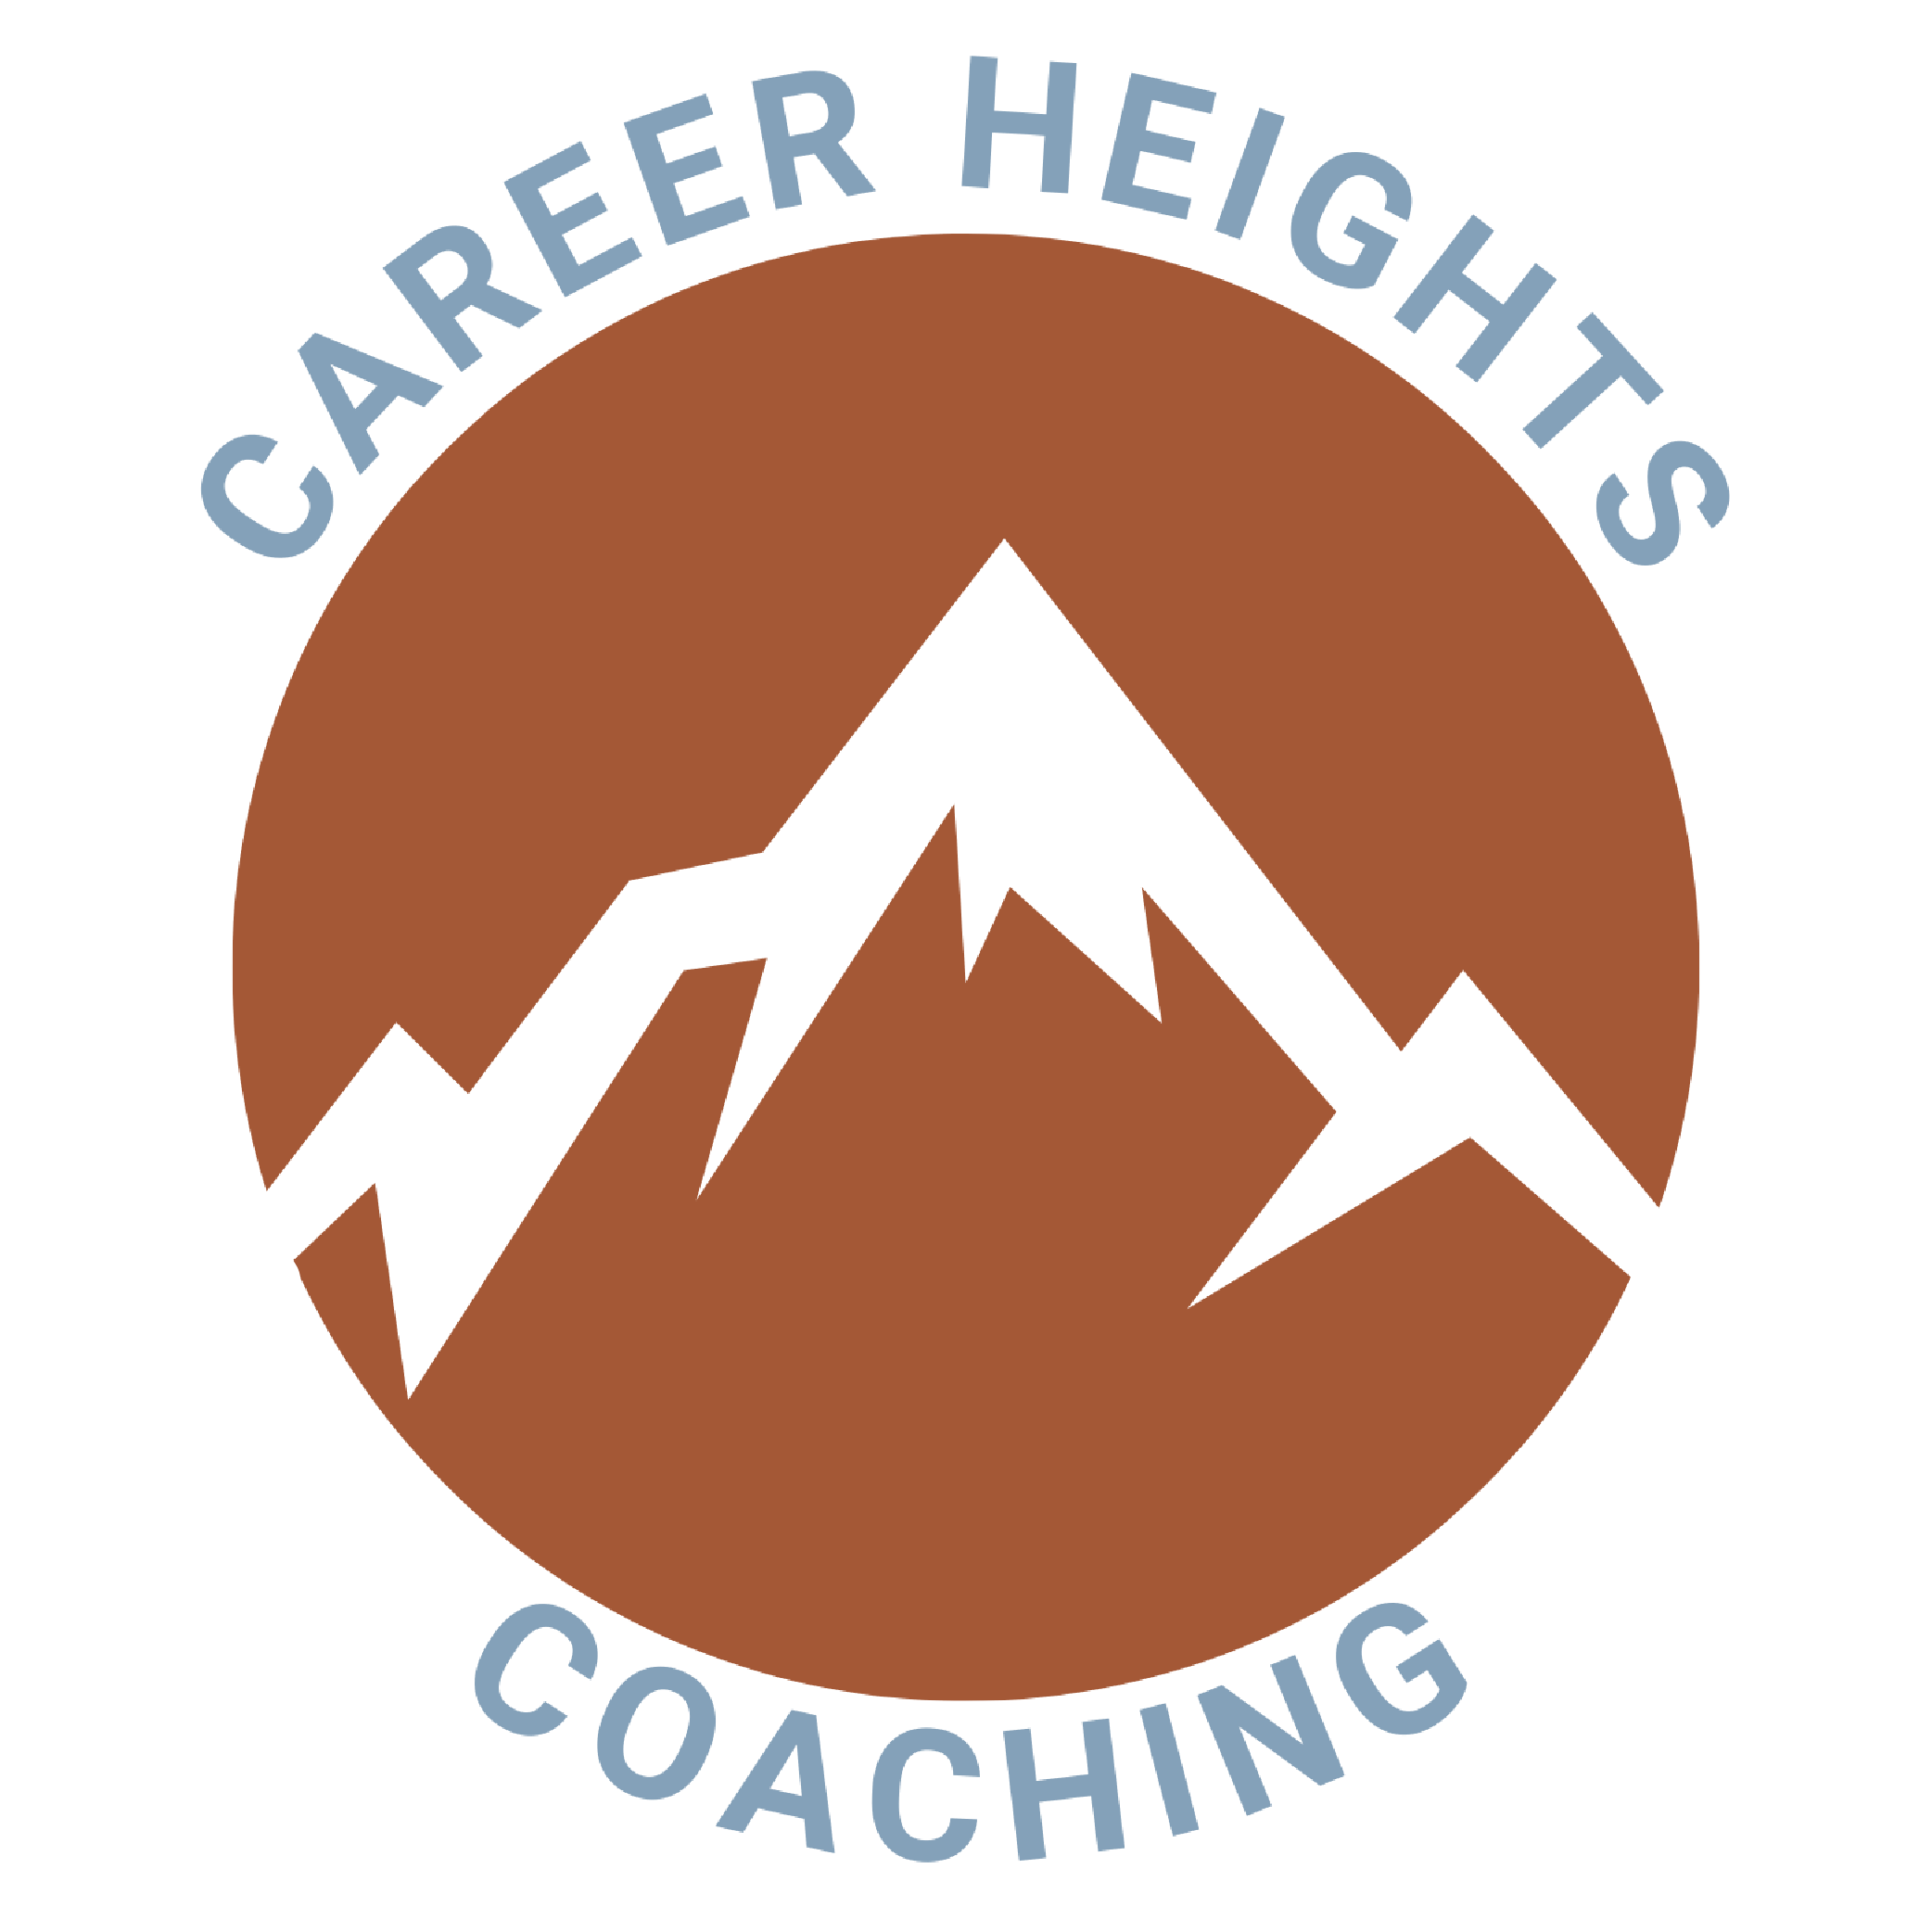 Career Heights Coaching